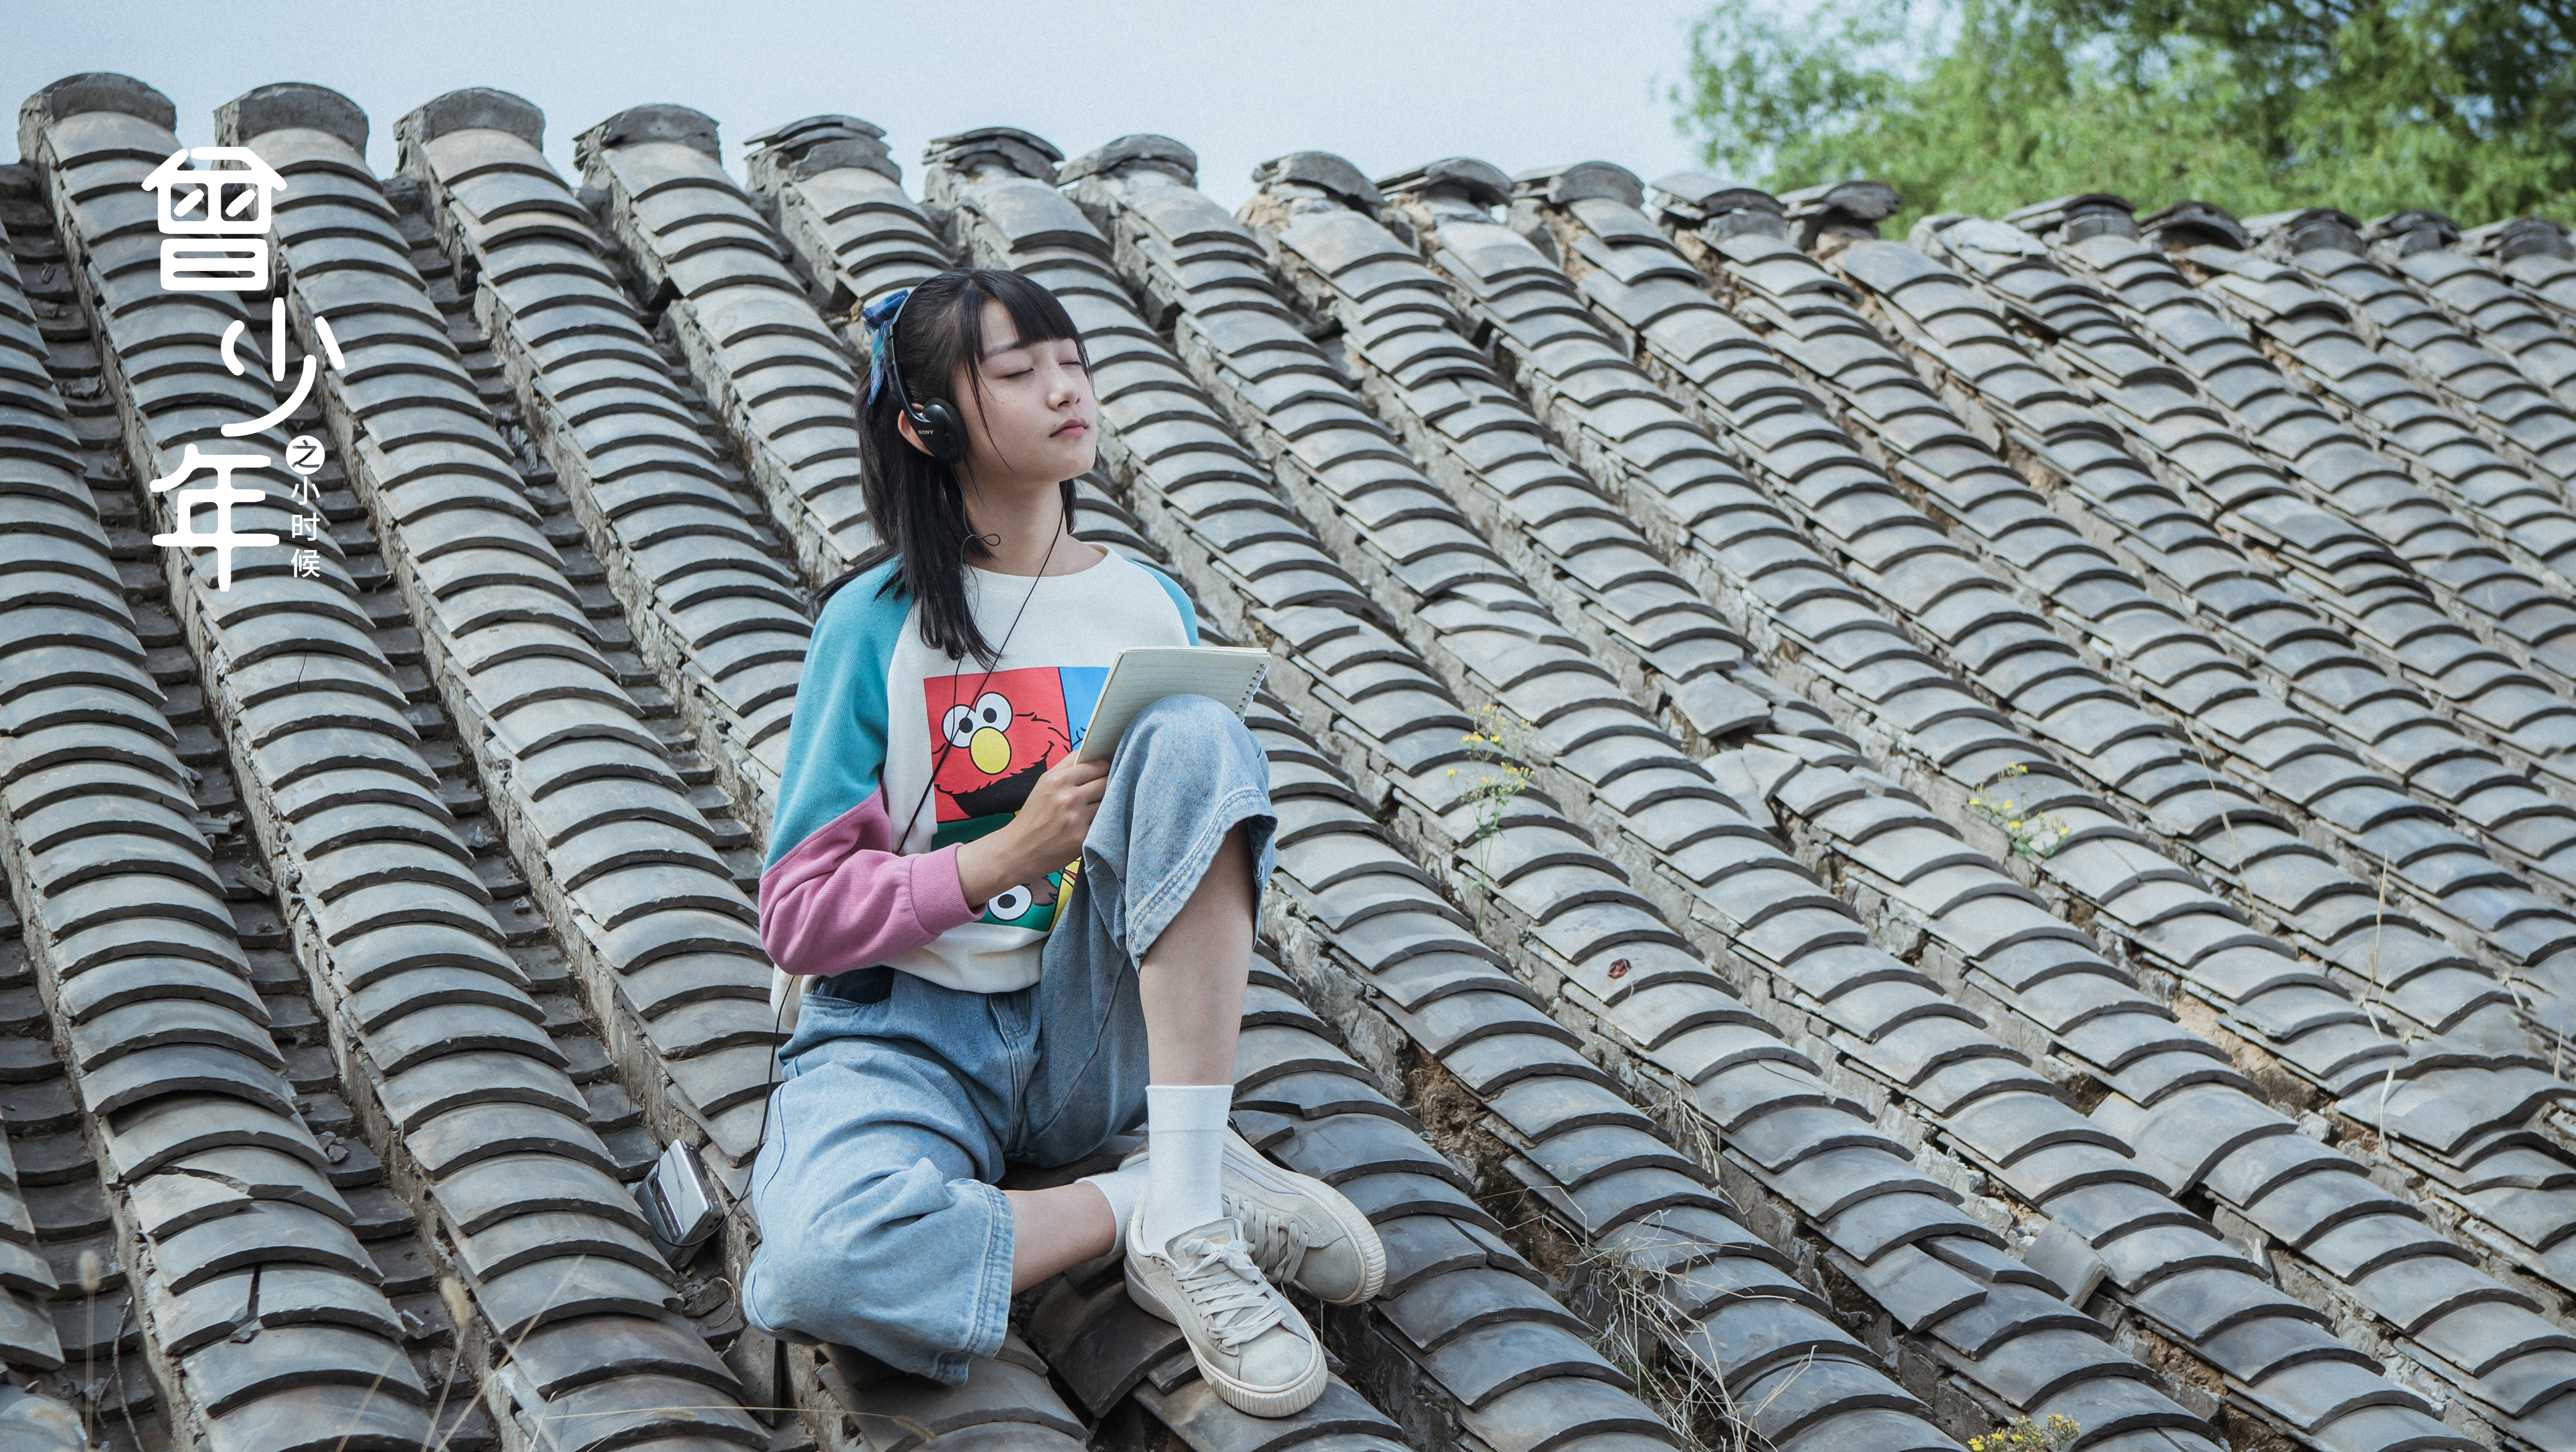 Zhangzimu Celebrity Asian Women Elmo Closed Eyes Headphones Sitting Rooftops 4724x2662